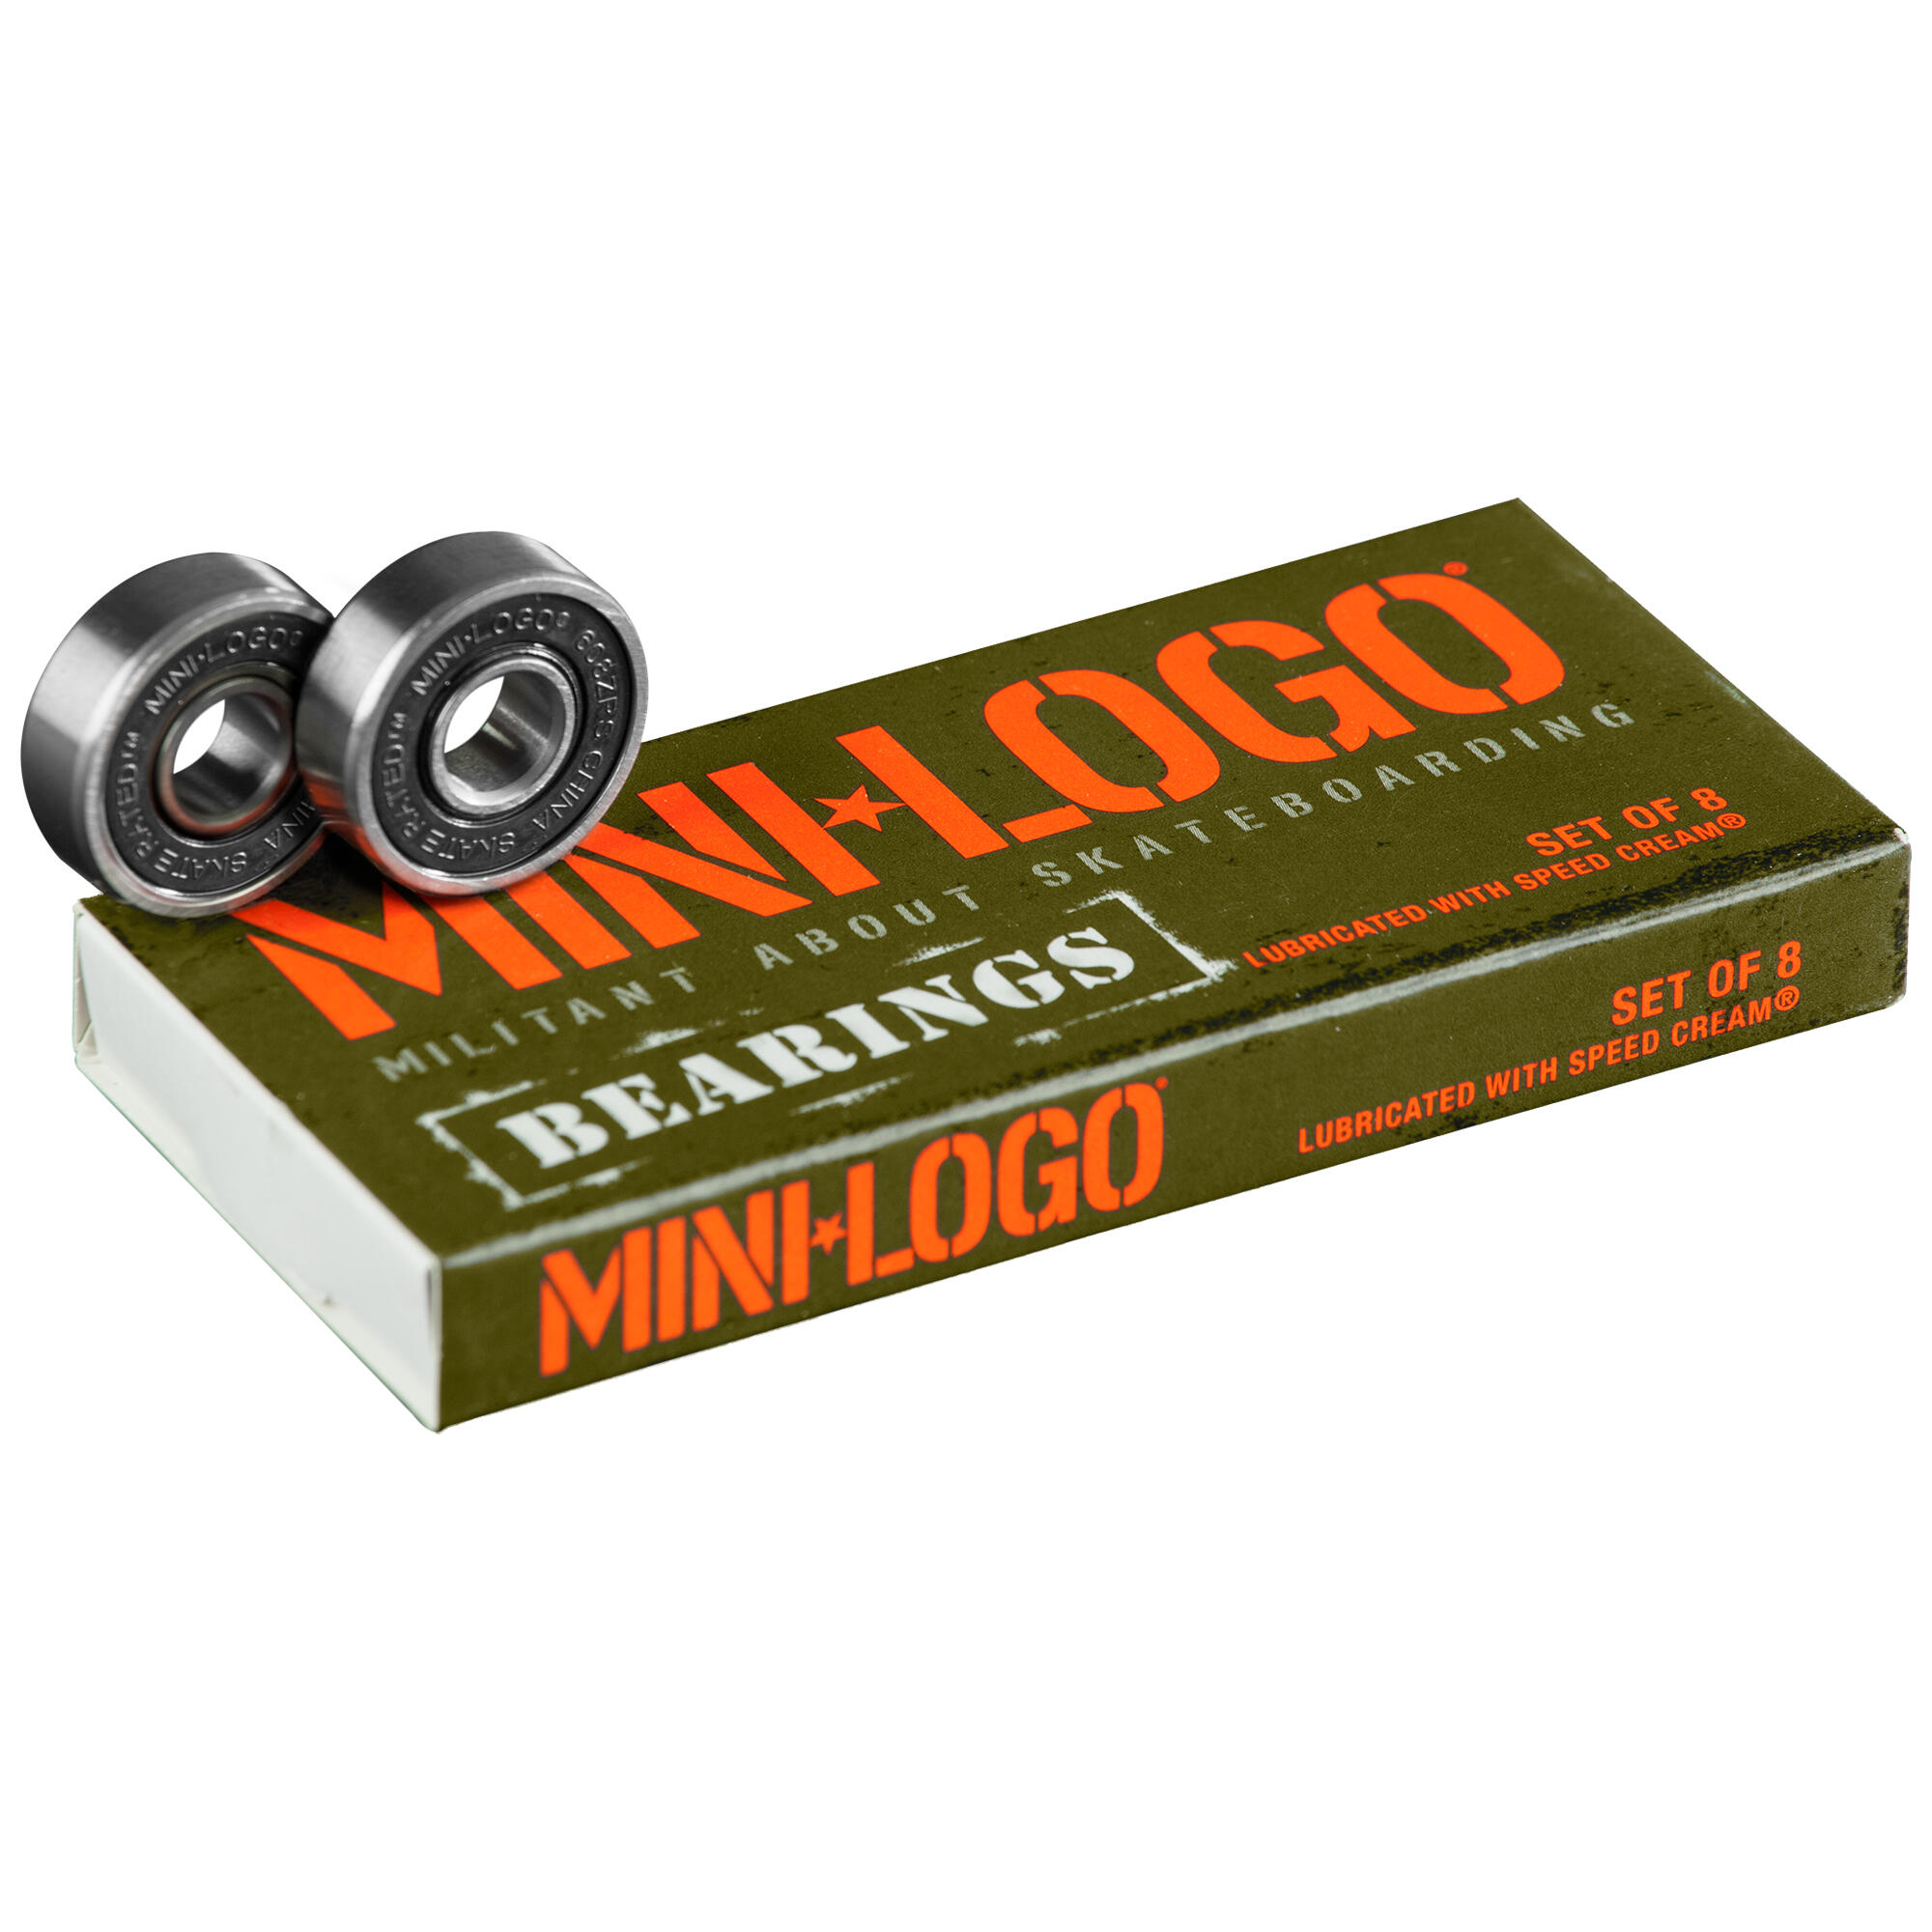 MINI LOGO MINI LOGO PRECISION BEARINGS - FOR SKATEBOARDS & LONGBOARDS - 8mm - 8 PACK